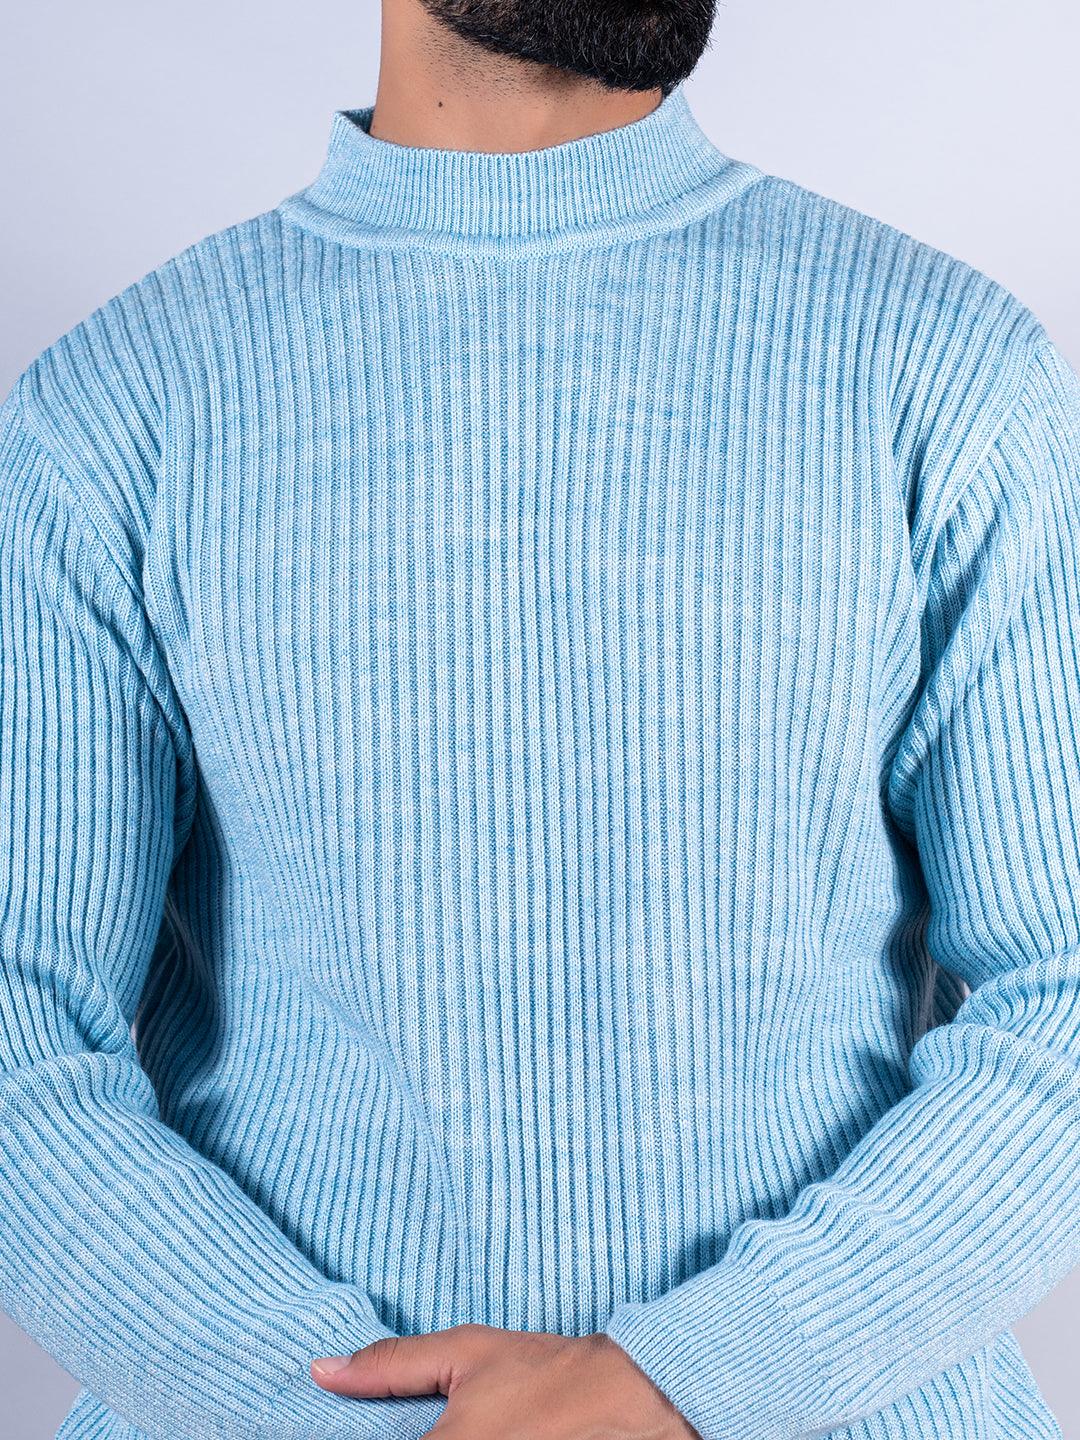 Powder Blue Color Turtle Neck Men's Sweater - Tistabene